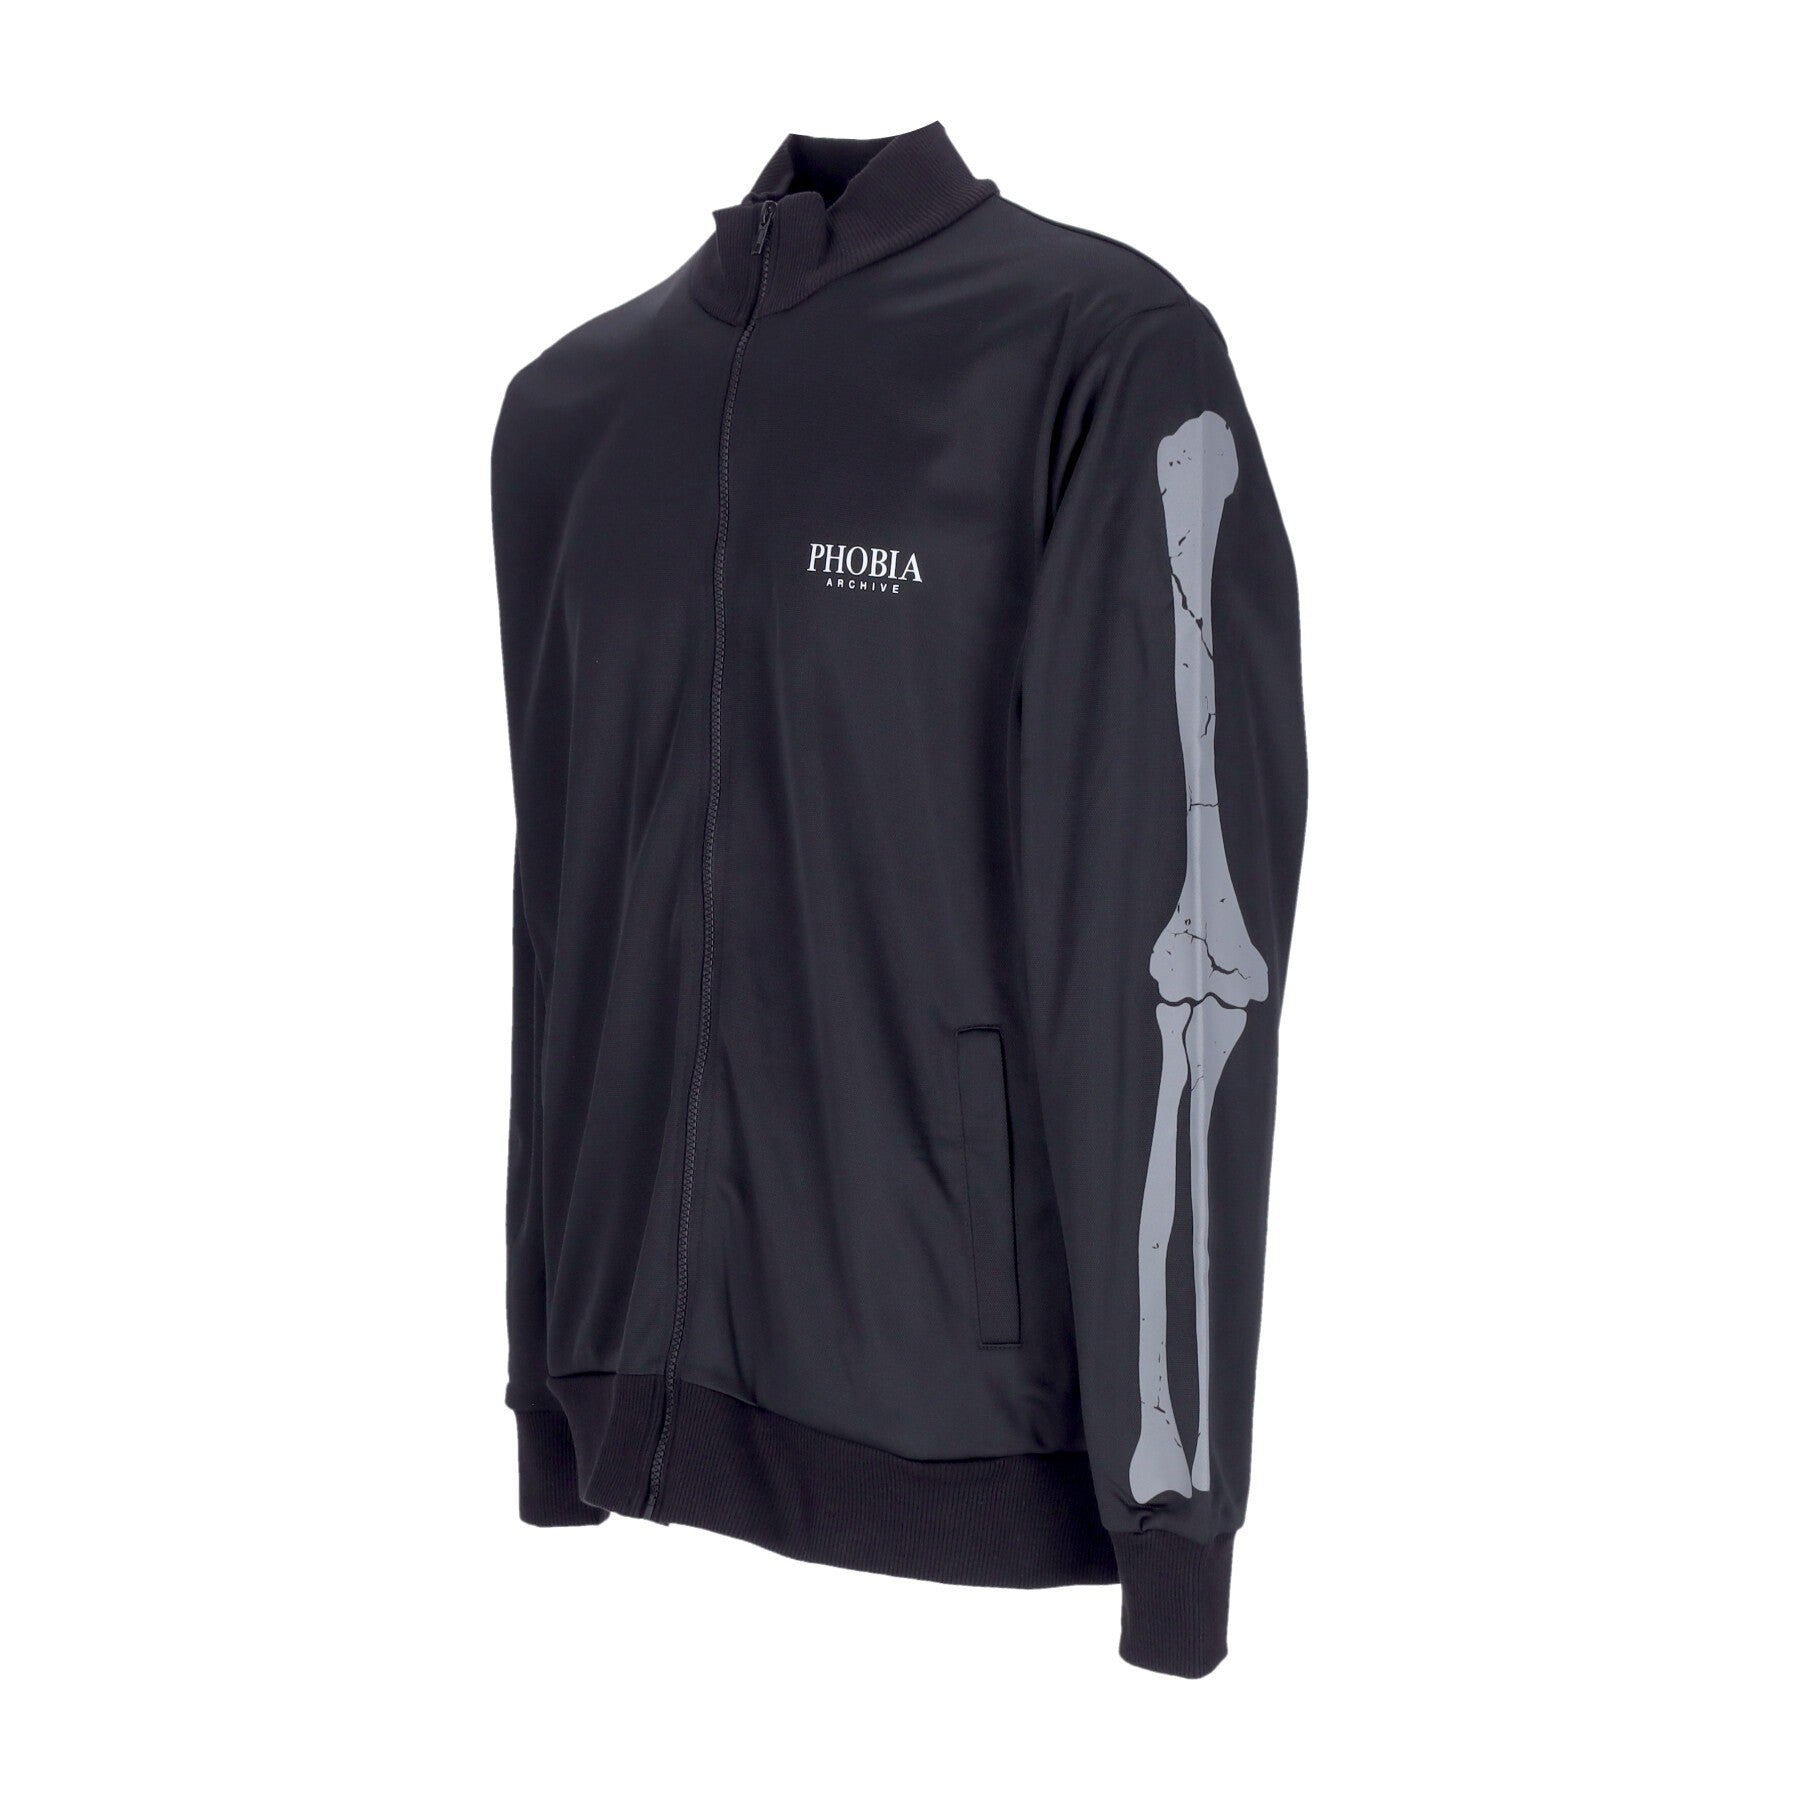 Men's Tracksuit Jacket Skeleton Print Sweatshirt Black/grey